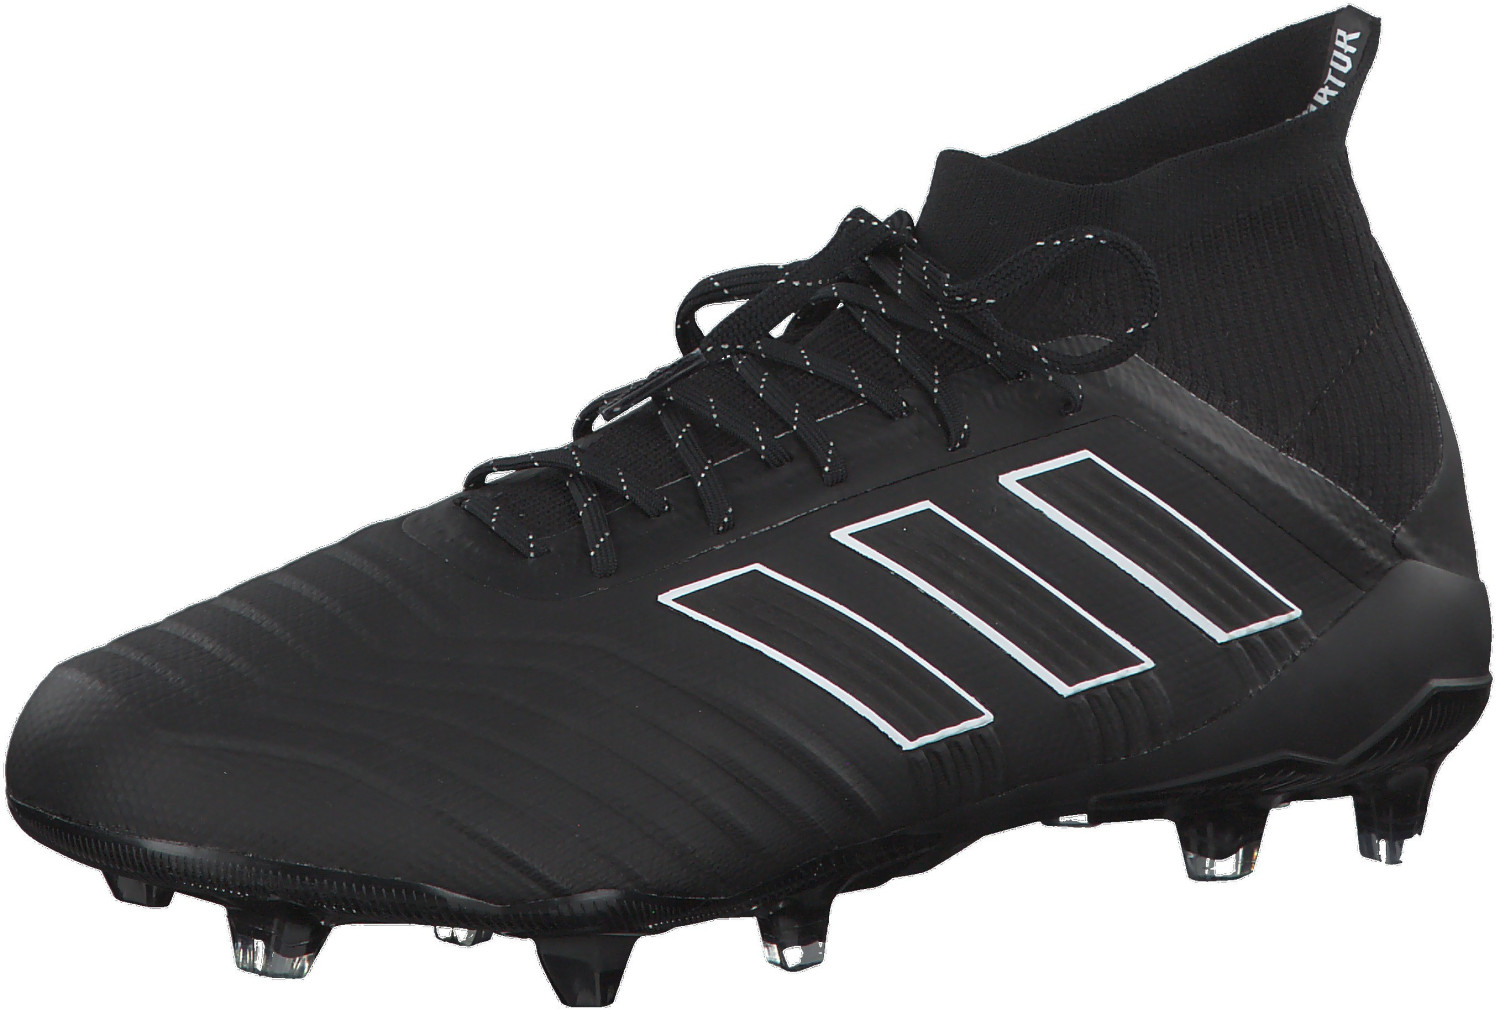 Adidas Football Boot Predator 18.1 FG